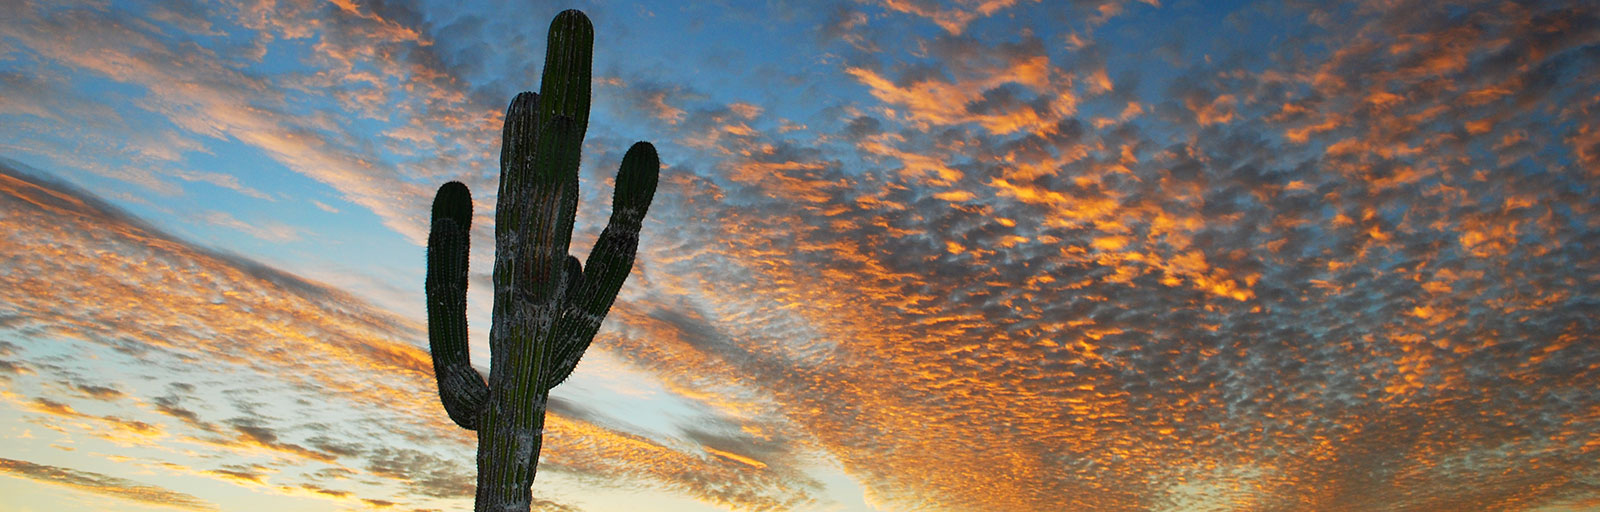 Meditation & Yoga Retreats in Mexico: Sunset with Cardon Cactus